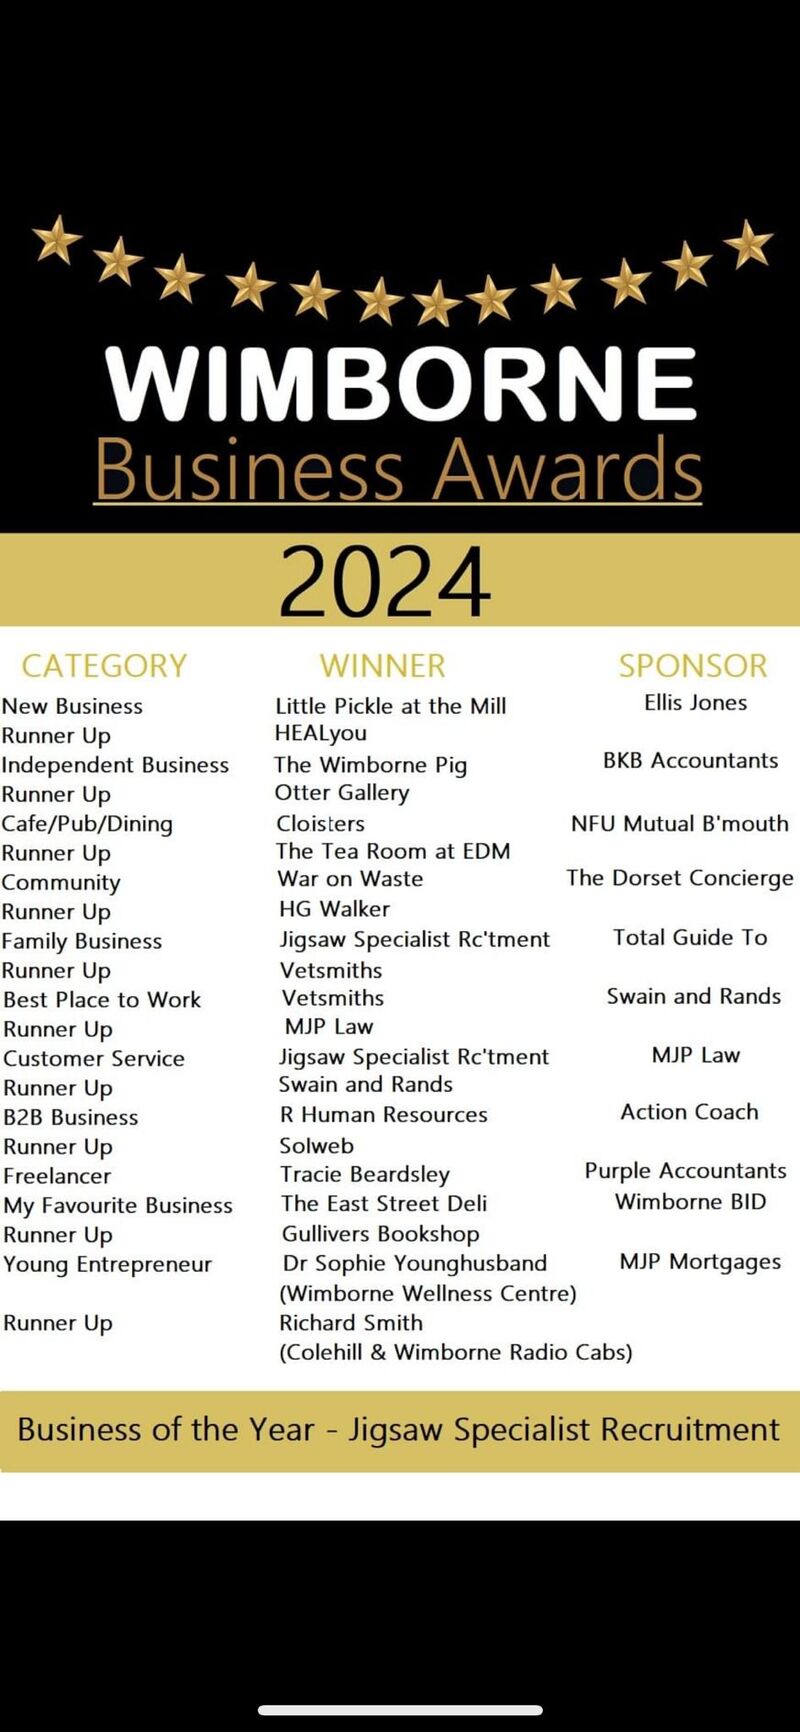 GALLERY: The Wimborne Business Awards